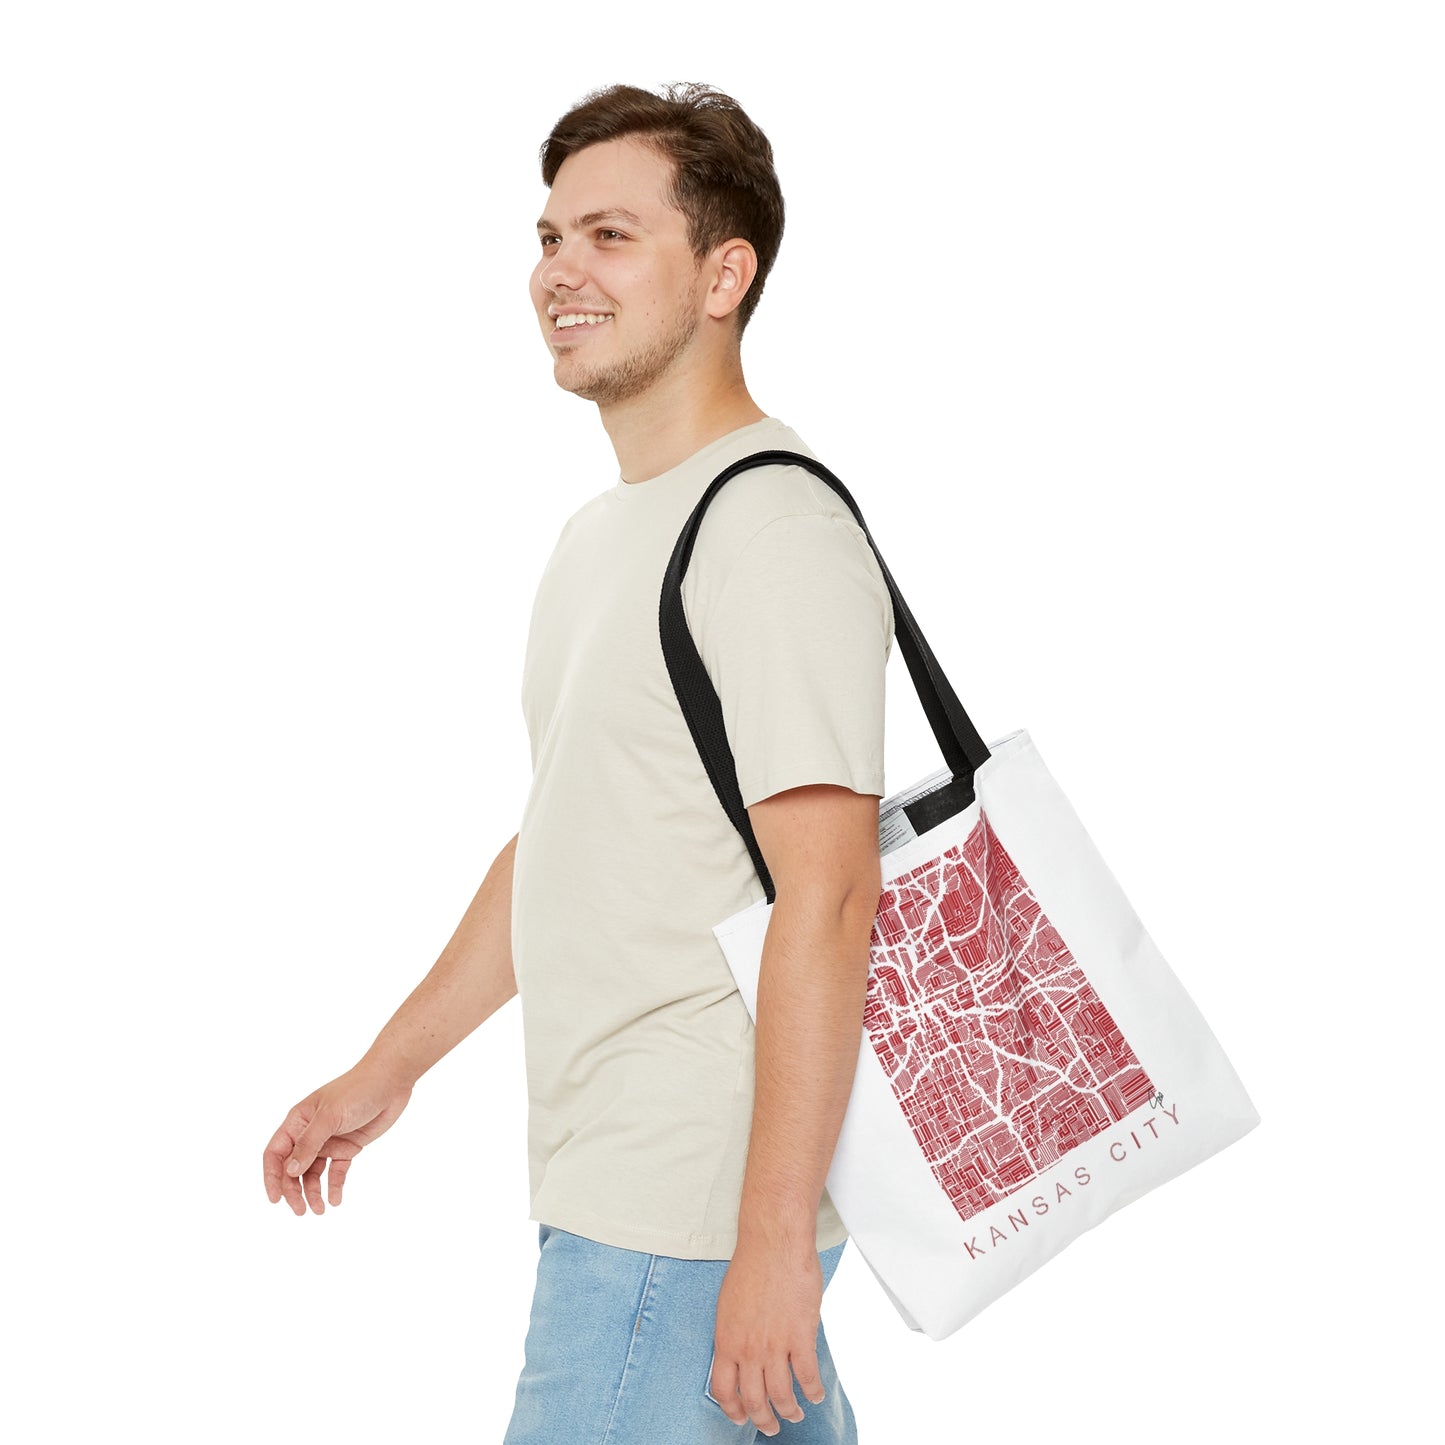 Something For Kansas City Red Design Tote Bag (AOP)